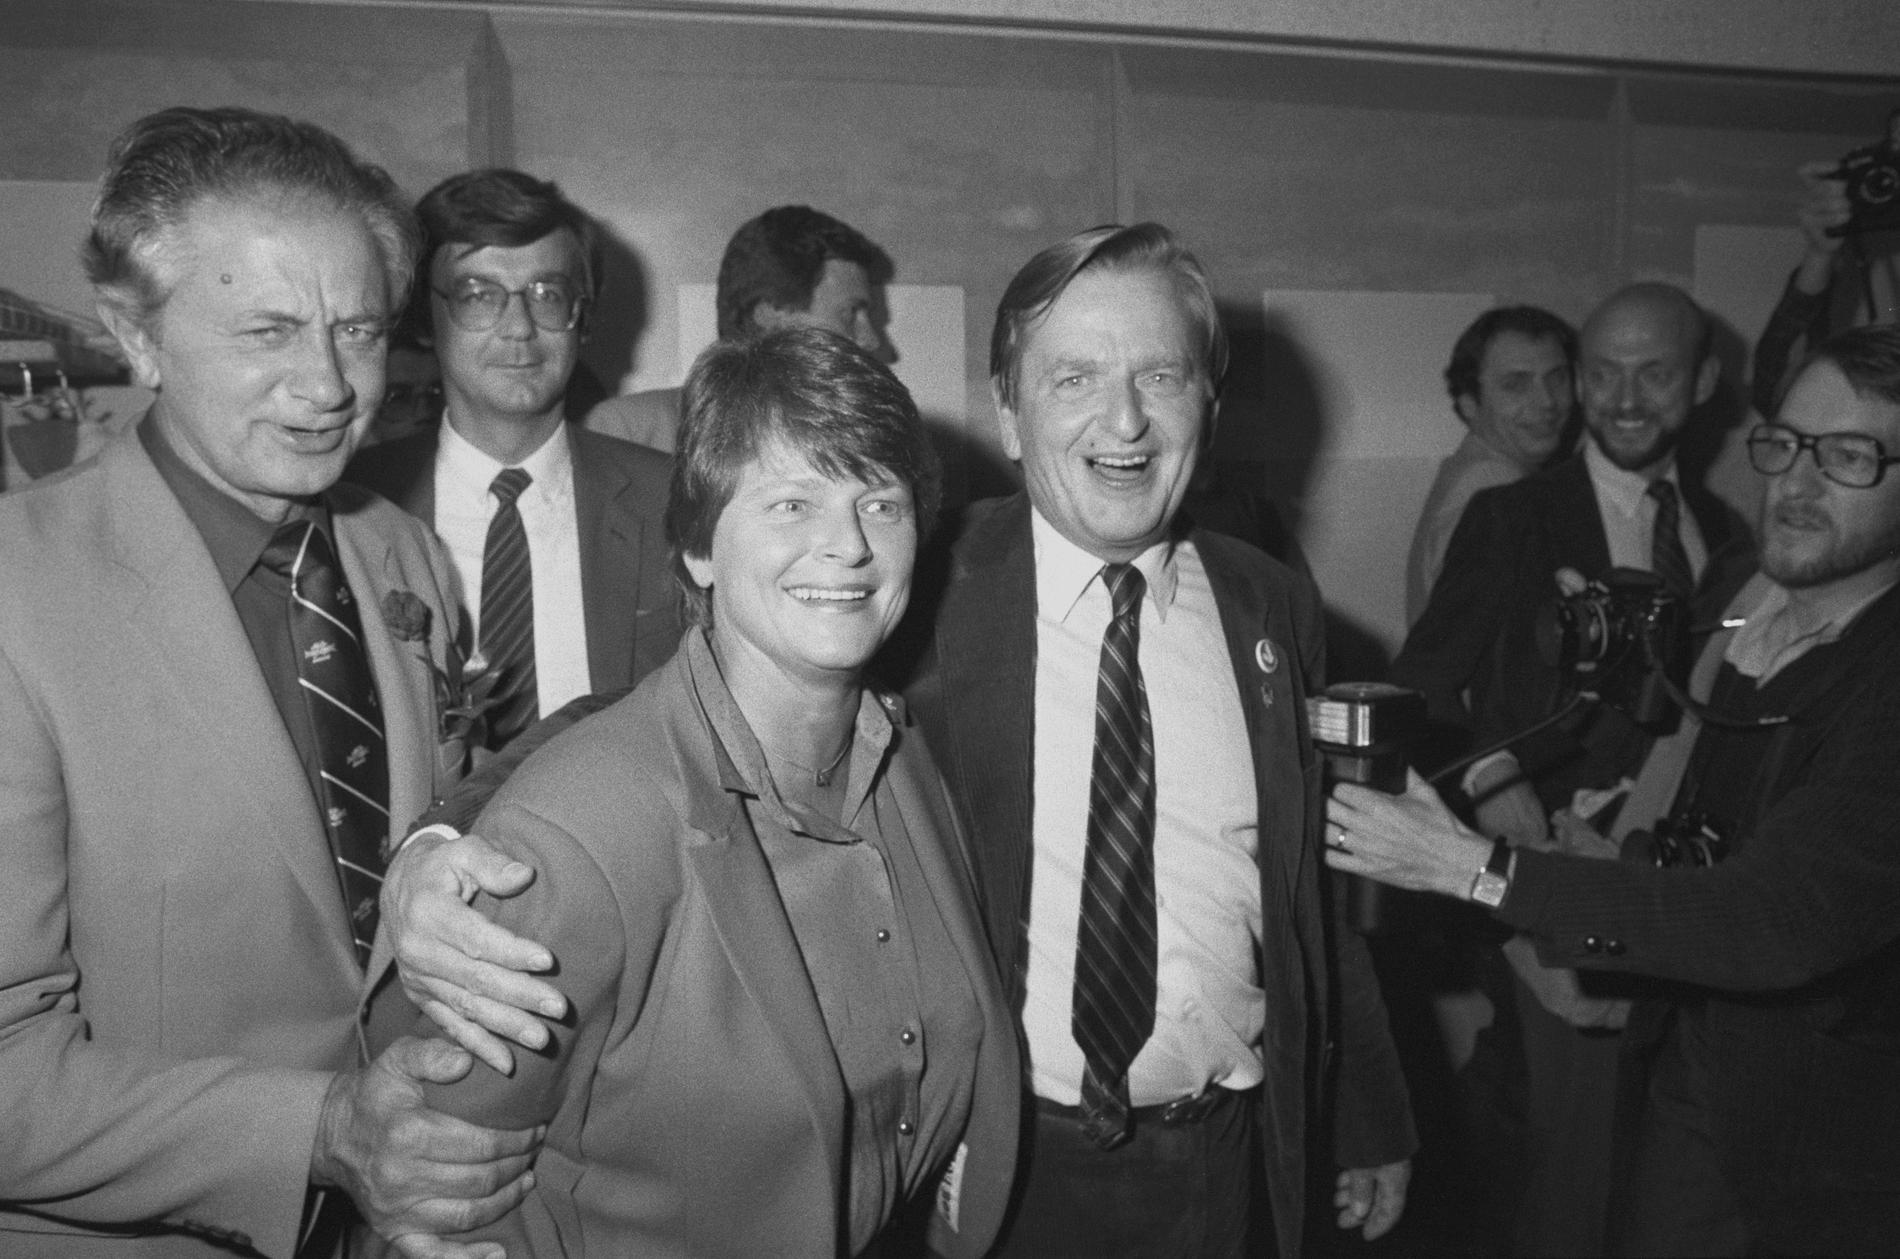 NÆRE BÅND MED SØTA BROR: Nyvalgt statsminister Olof Palme med hånden rundt daværende parlamentarisk leder i det norske Arbeiderpartiet, Gro Harlem Brundtland. 